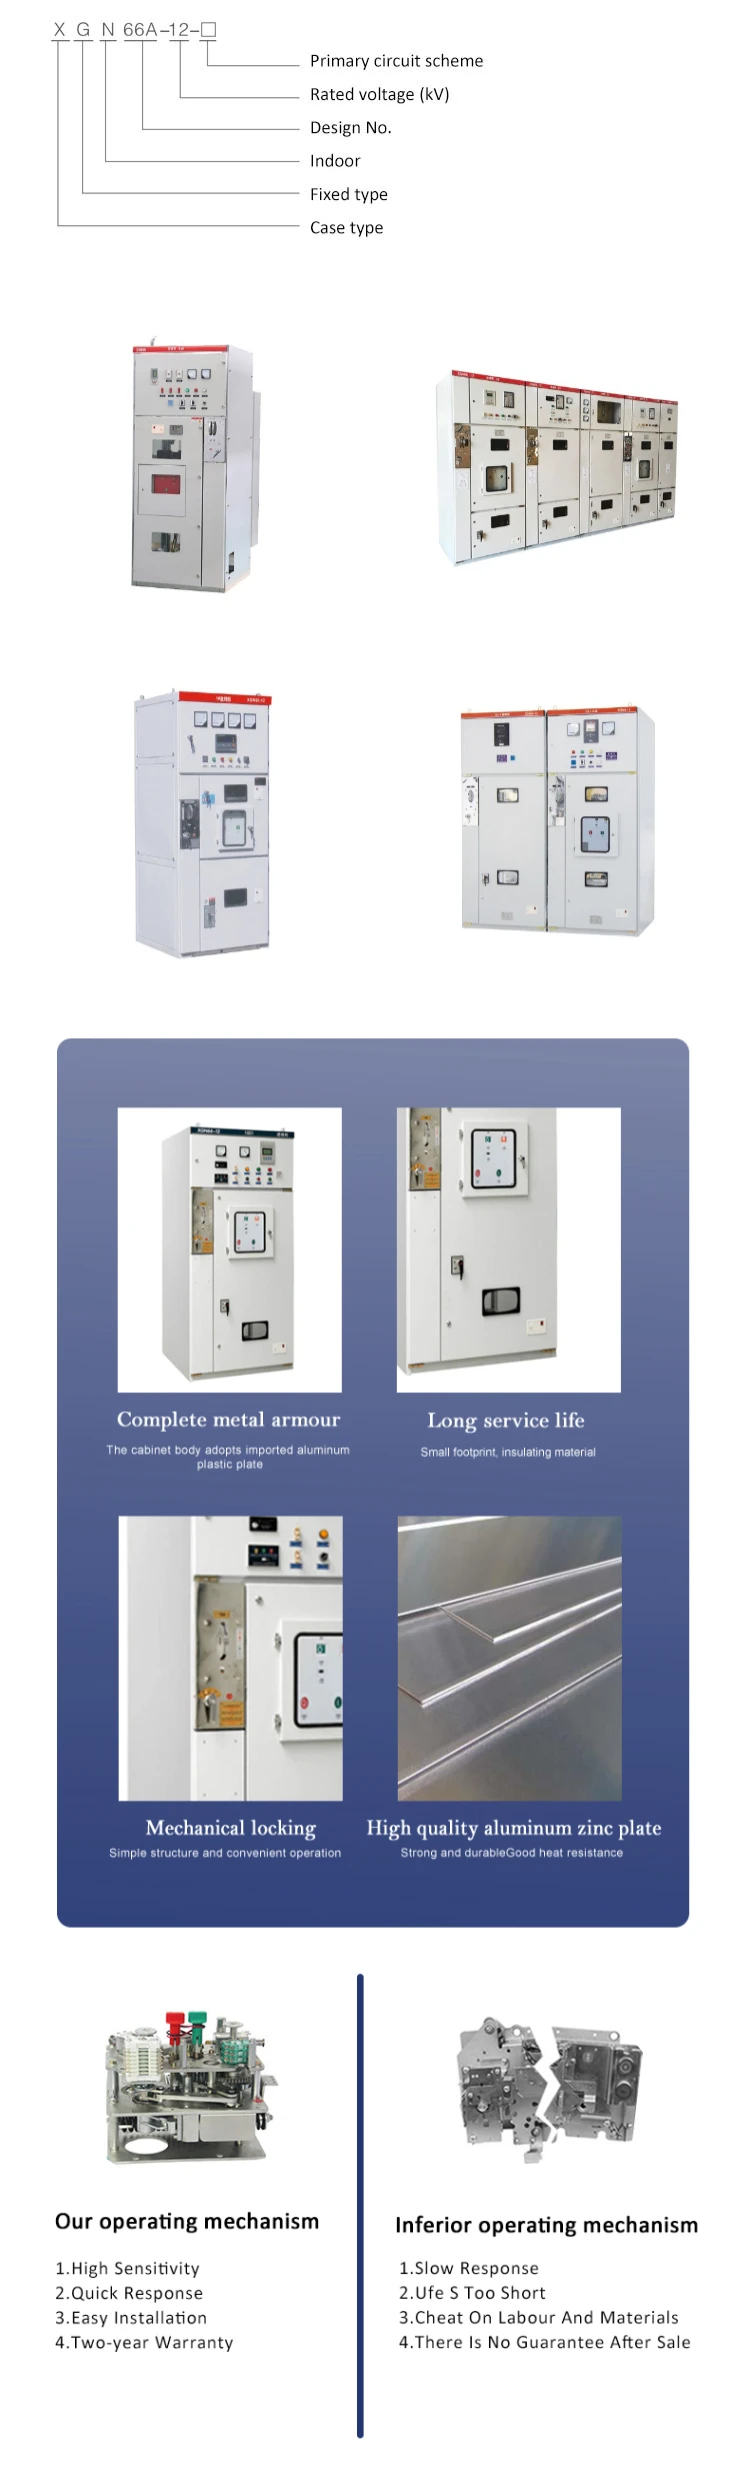 Xgn66-12 12kV 11kV Indoor High Voltage Switchgear Power Distribution Cabinet